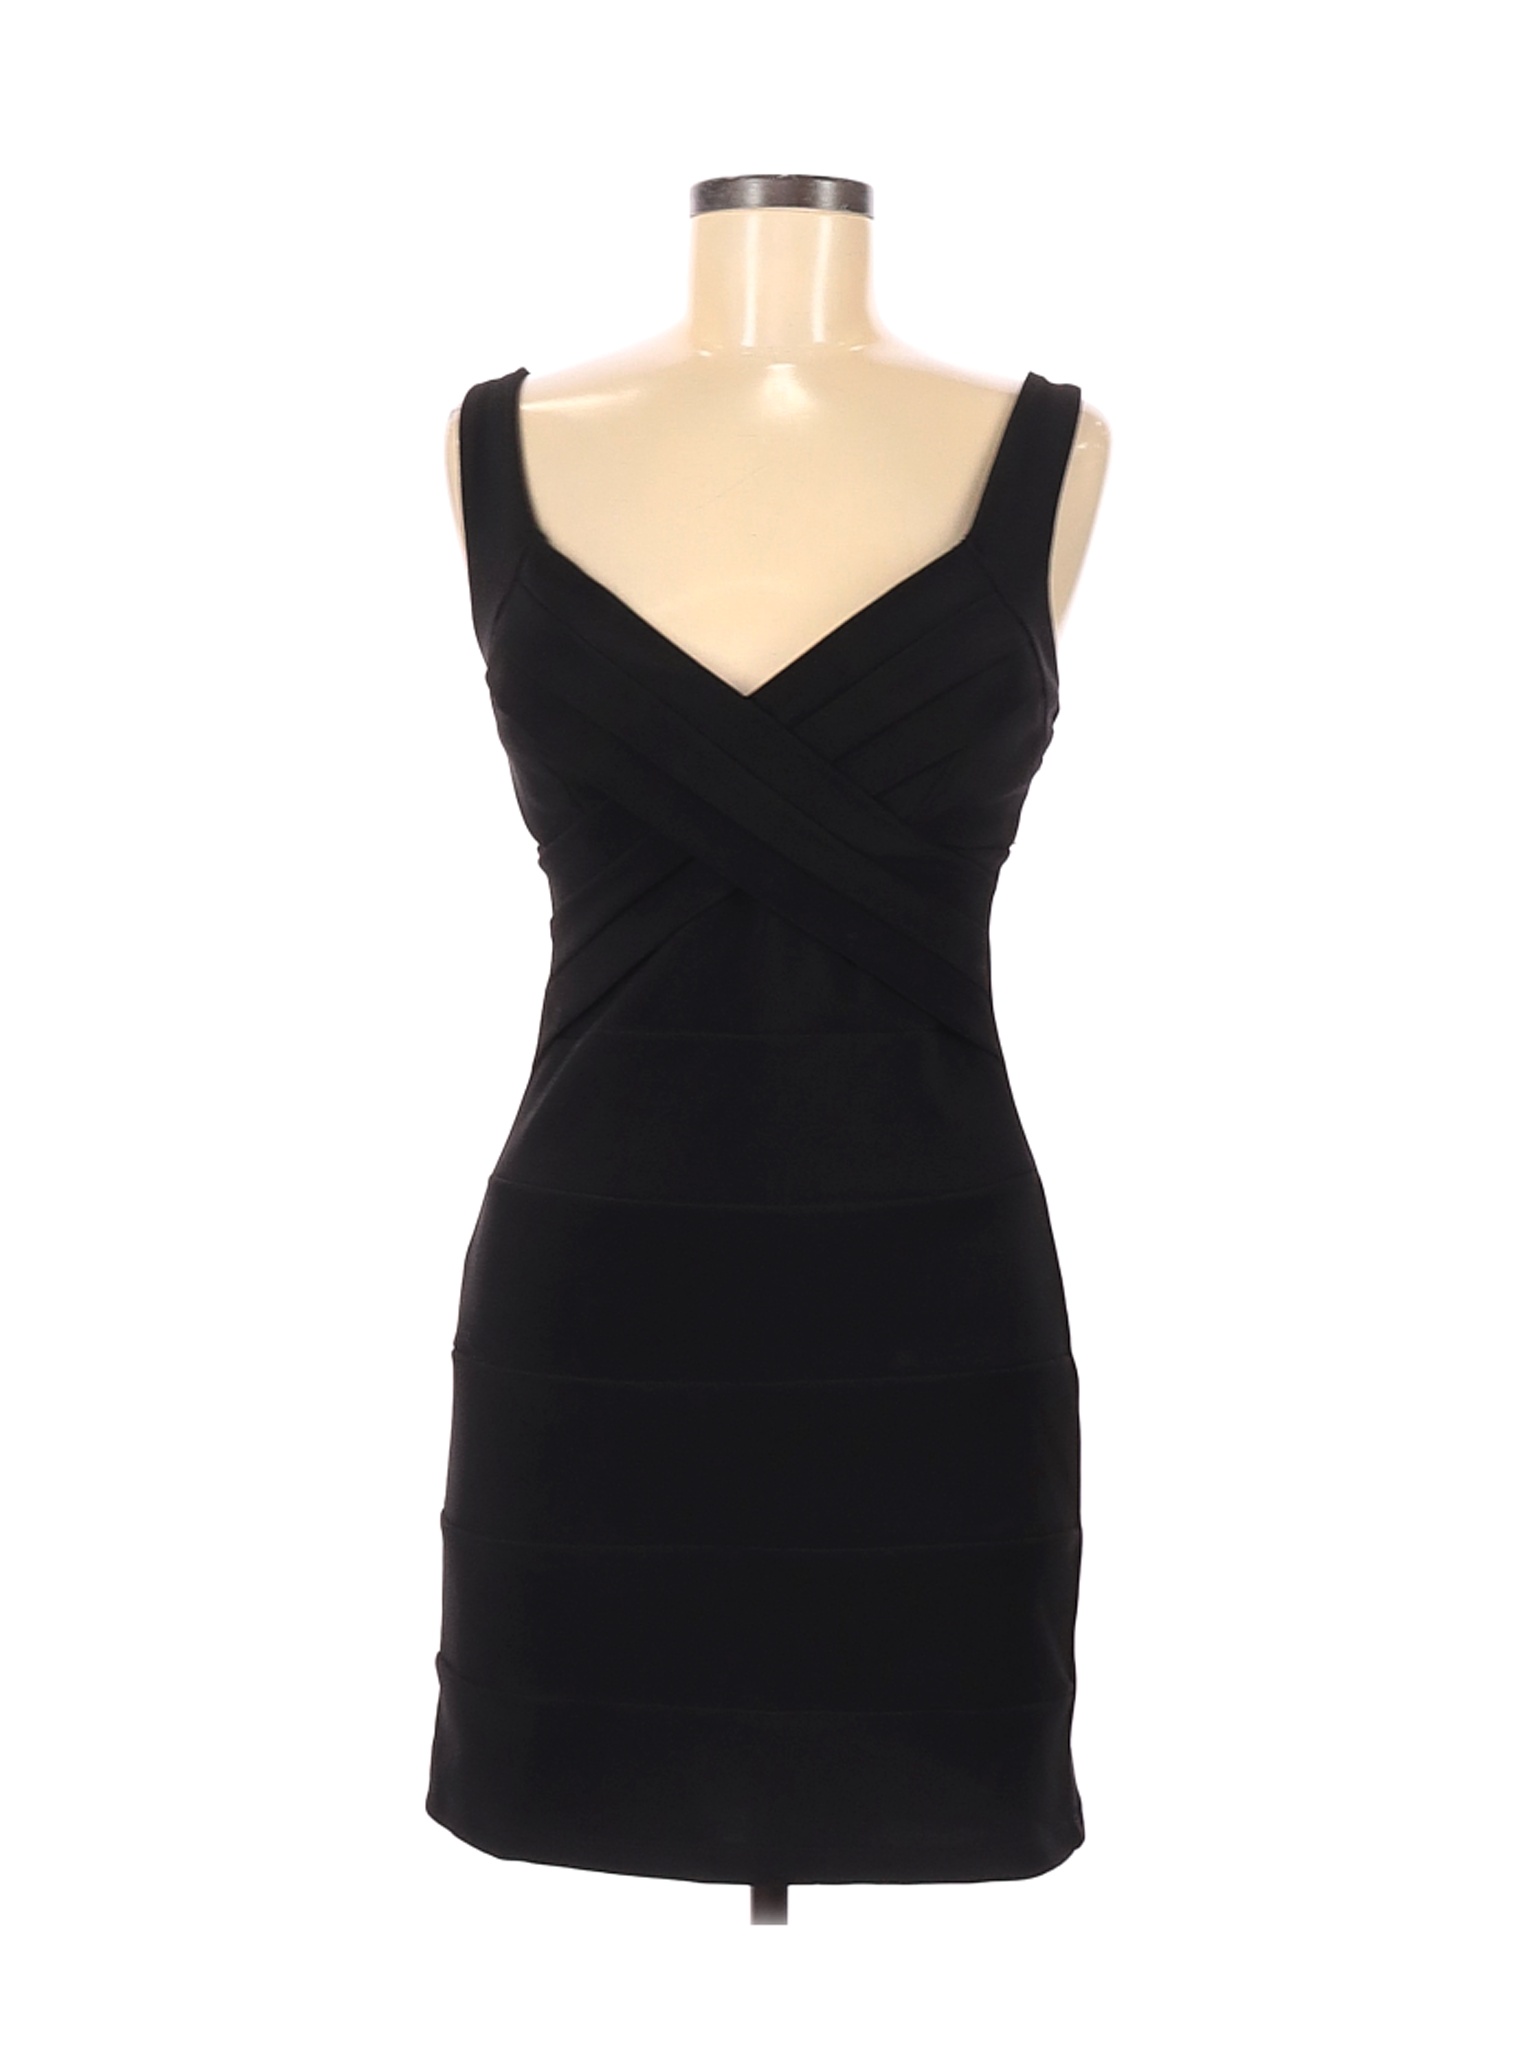 Windsor Women Black Cocktail Dress M | eBay